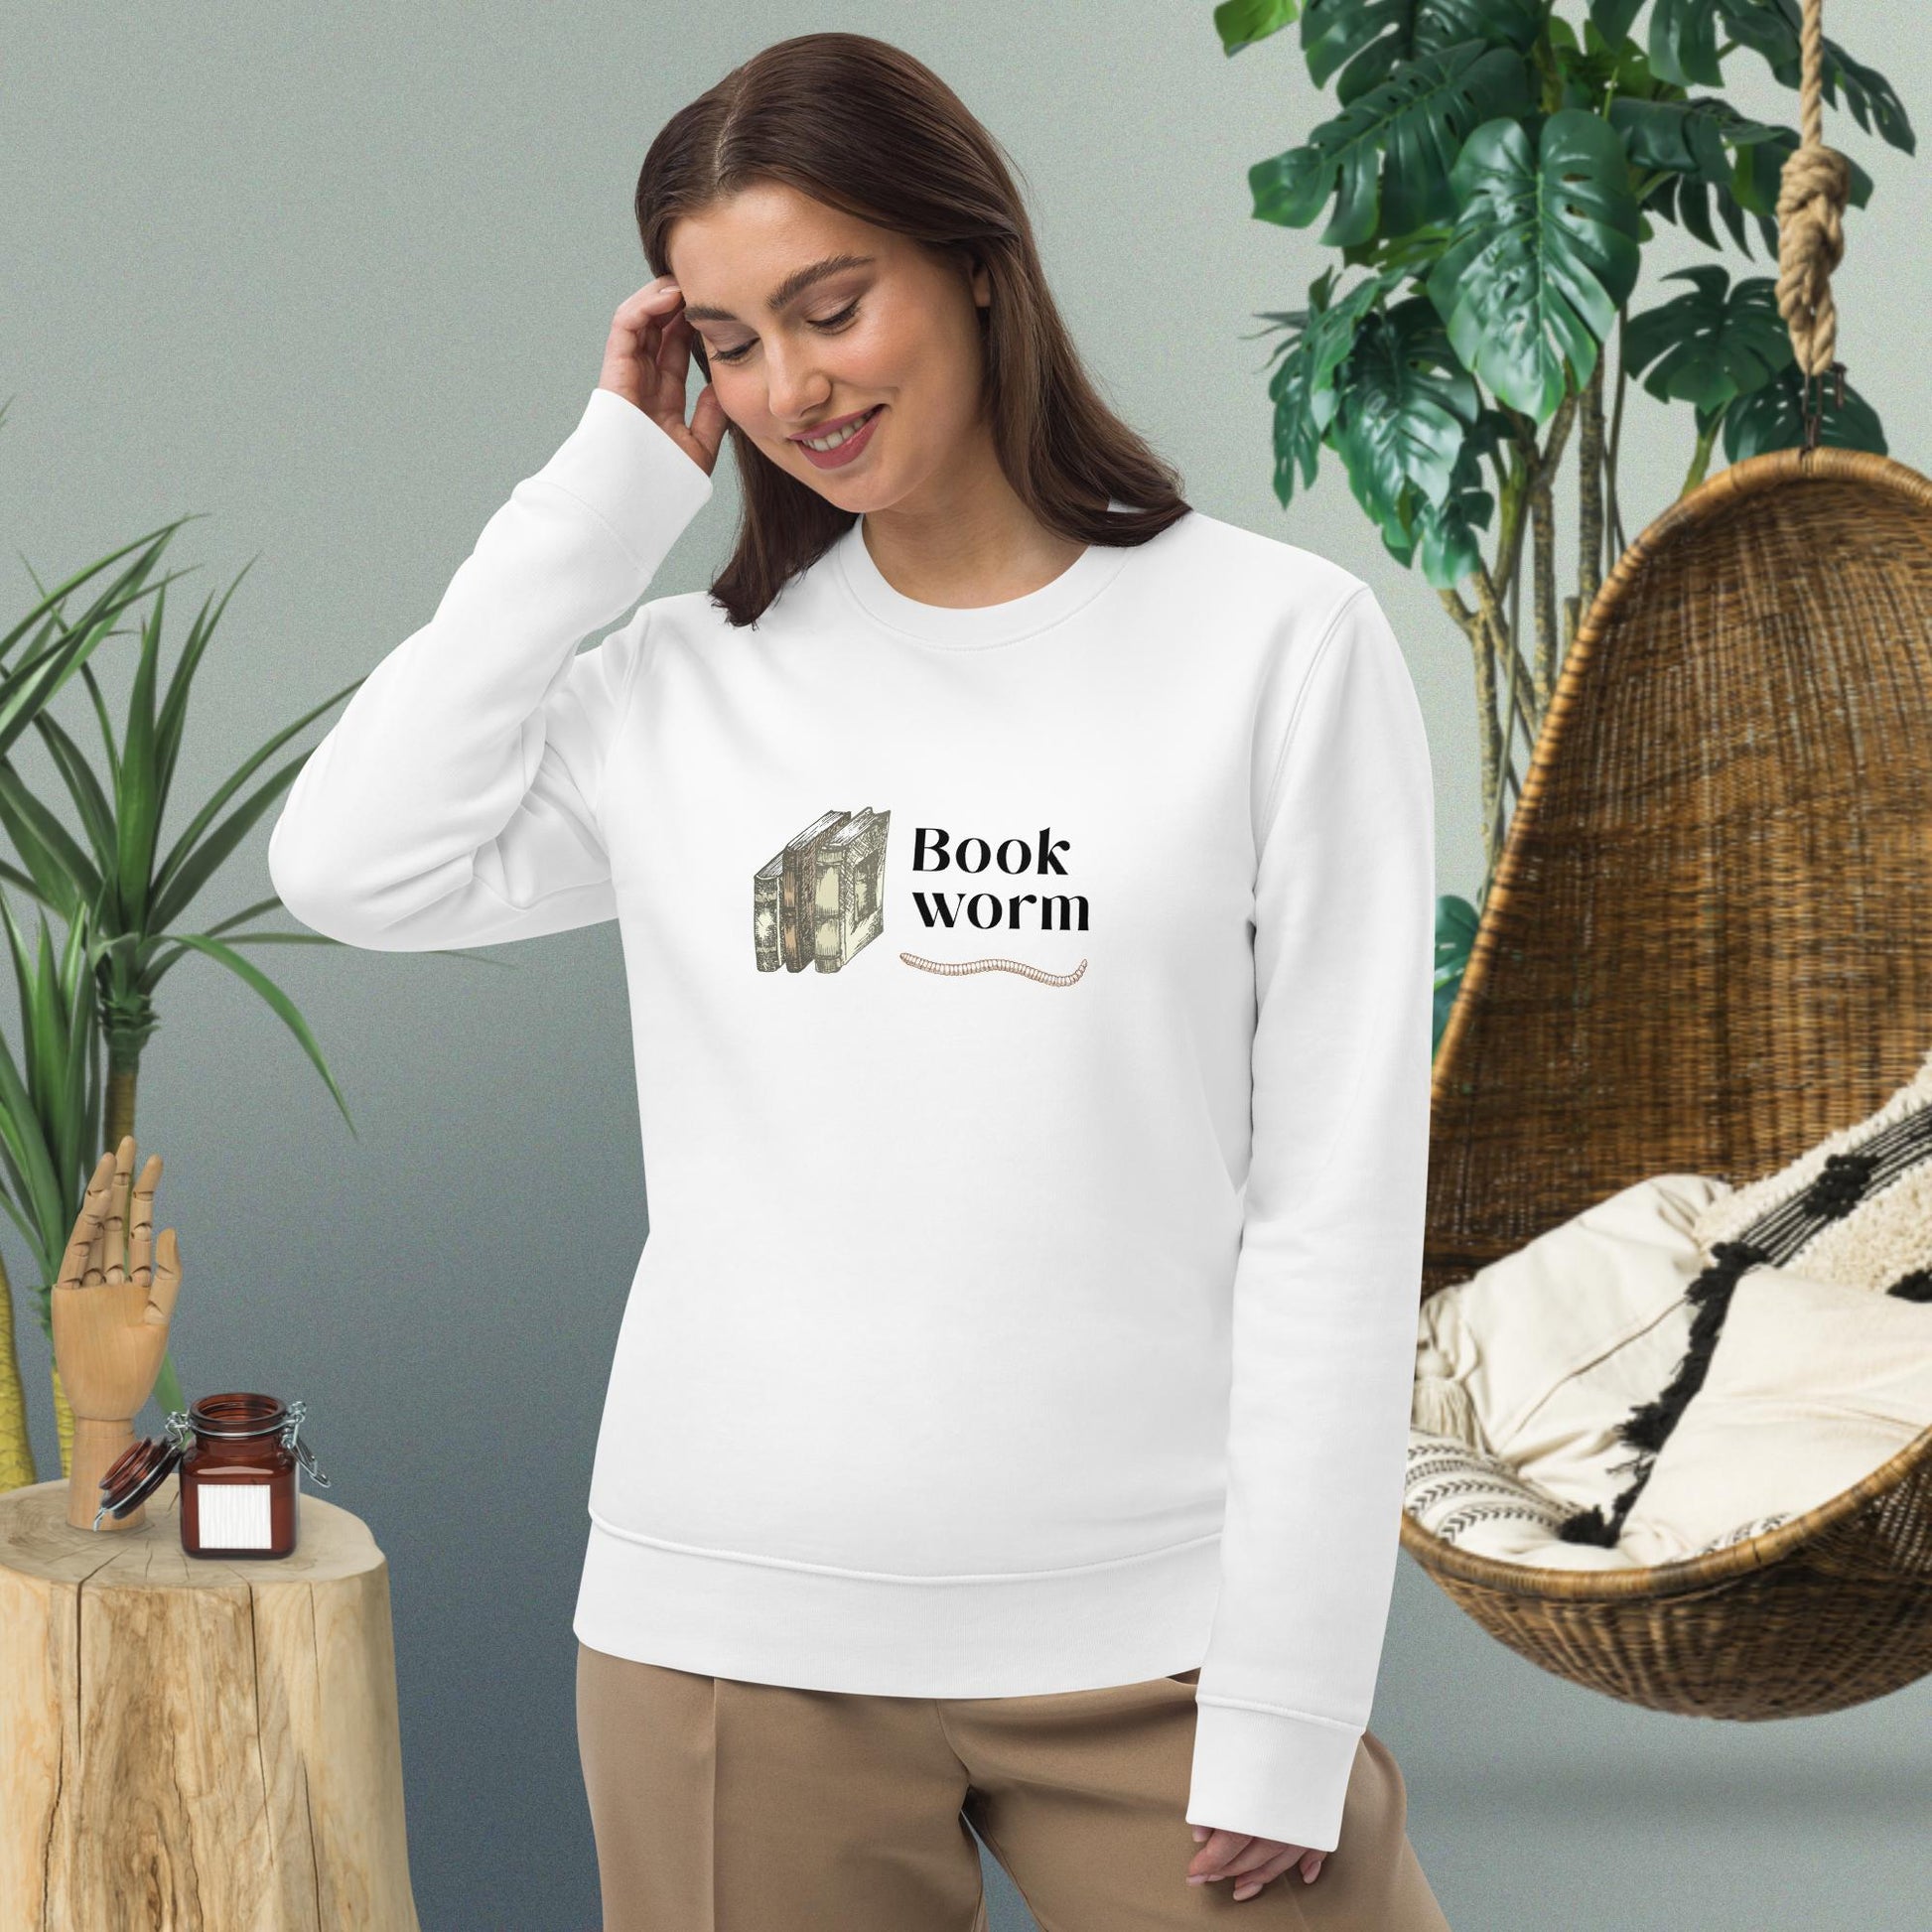 Books 'Bookworm' Organic Cotton Sweatshirt - Book worm